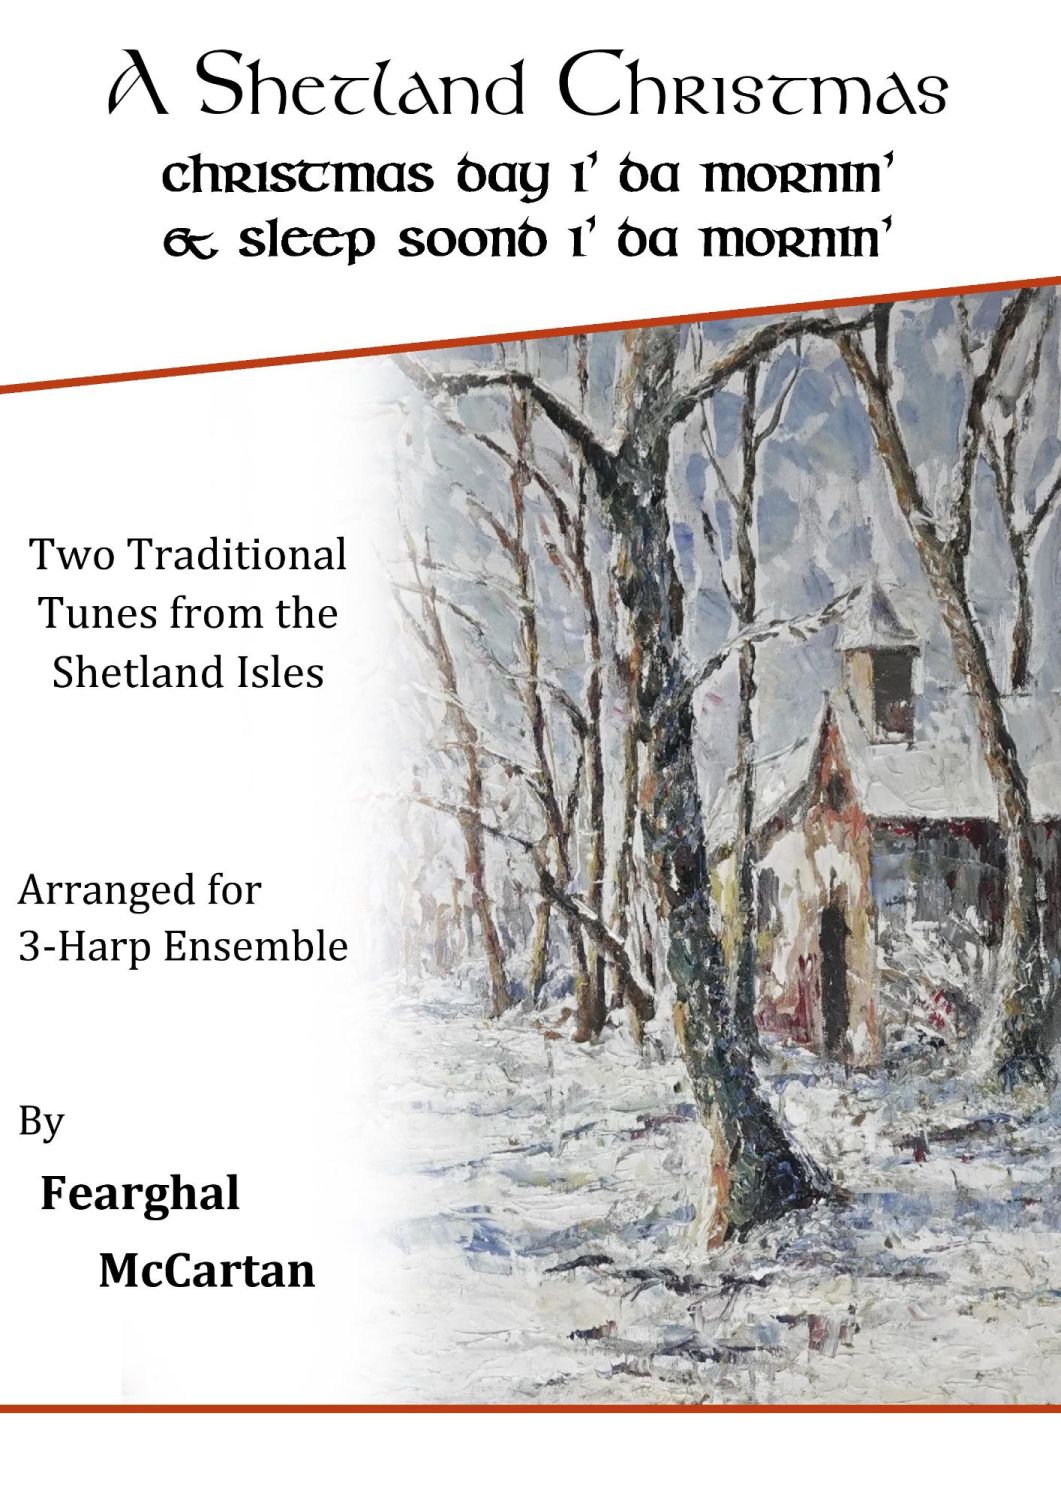 A Shetland Christmas - 3 Harps - Fearghal McCartan (Digital)